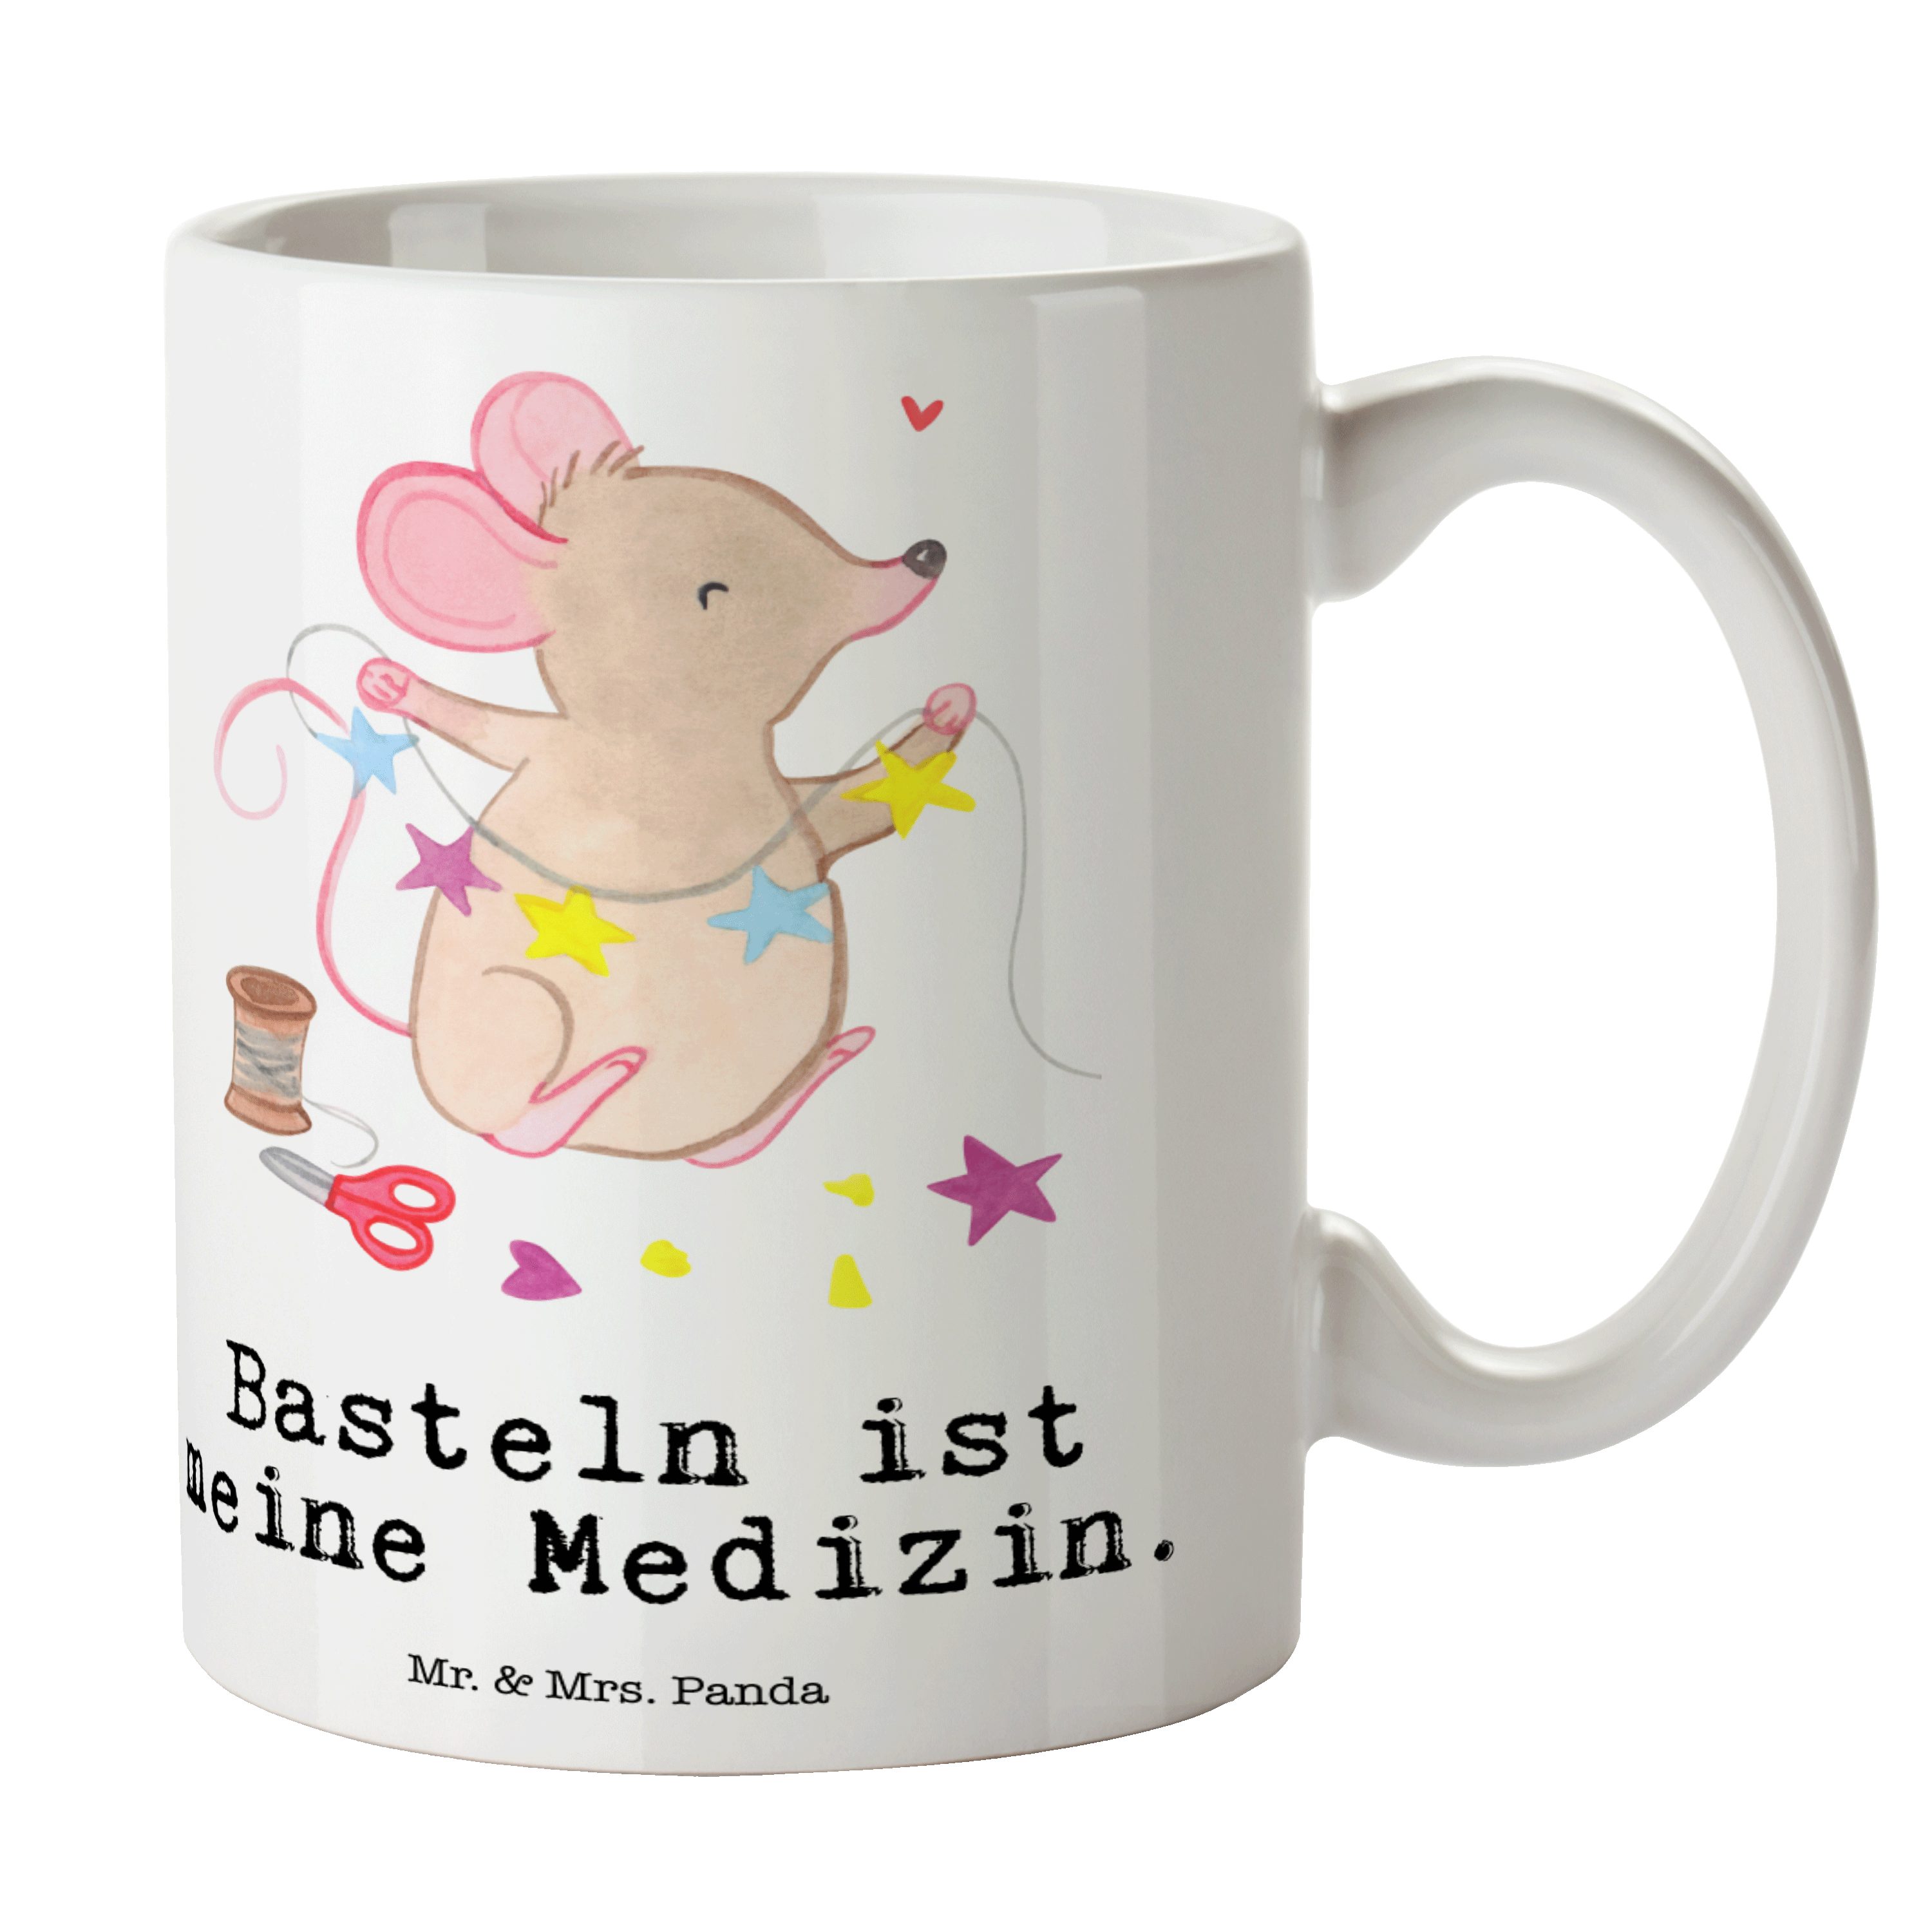 Mr. & Mrs. Panda Tasse Maus Basteln Medizin - Weiß - Geschenk, DIY, Tasse, Porzellantasse, K, Keramik